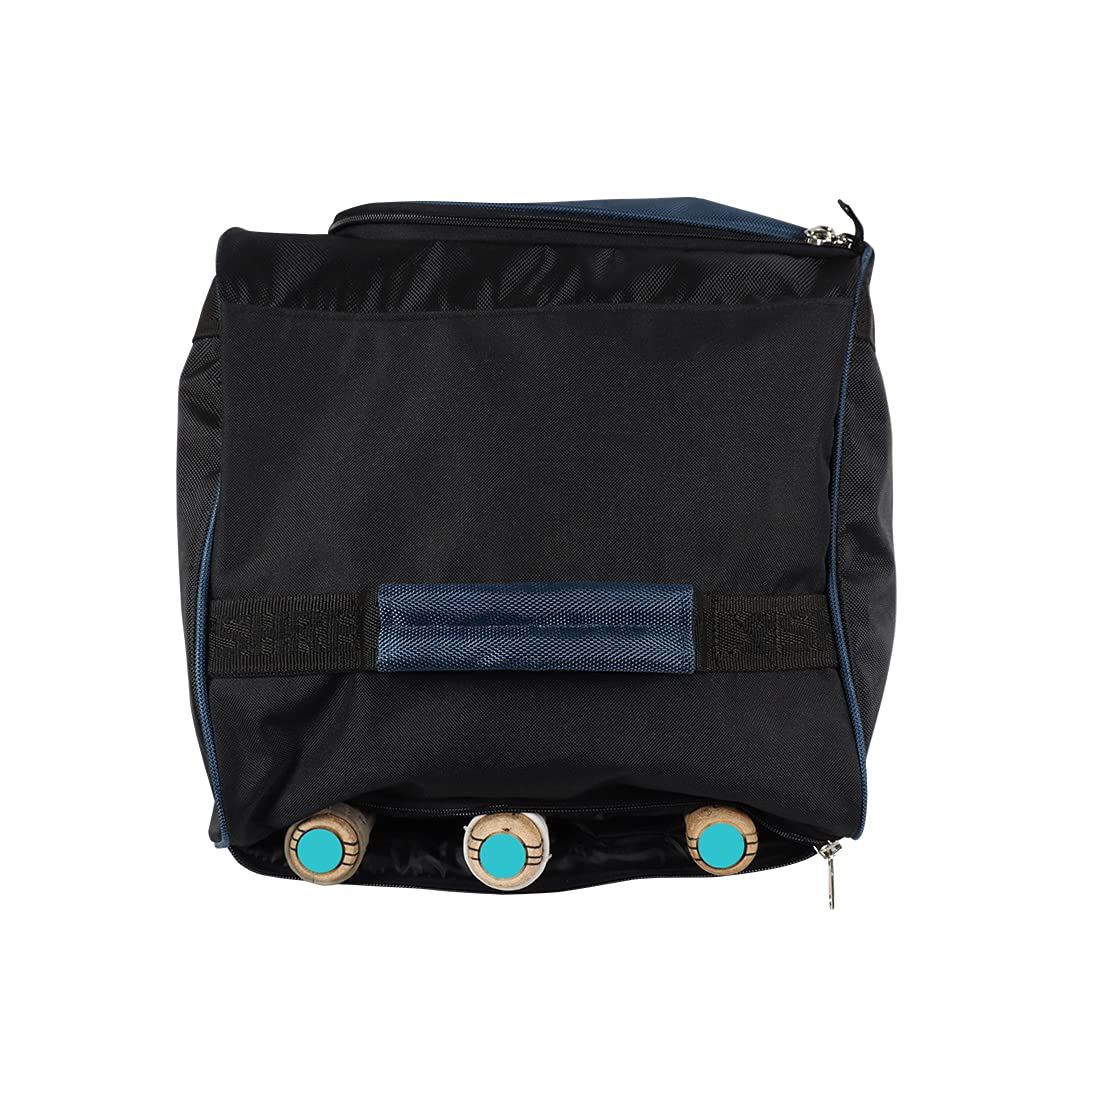 Cricket Kit Bag SHREY Star Wheelie Bag Blue & Black